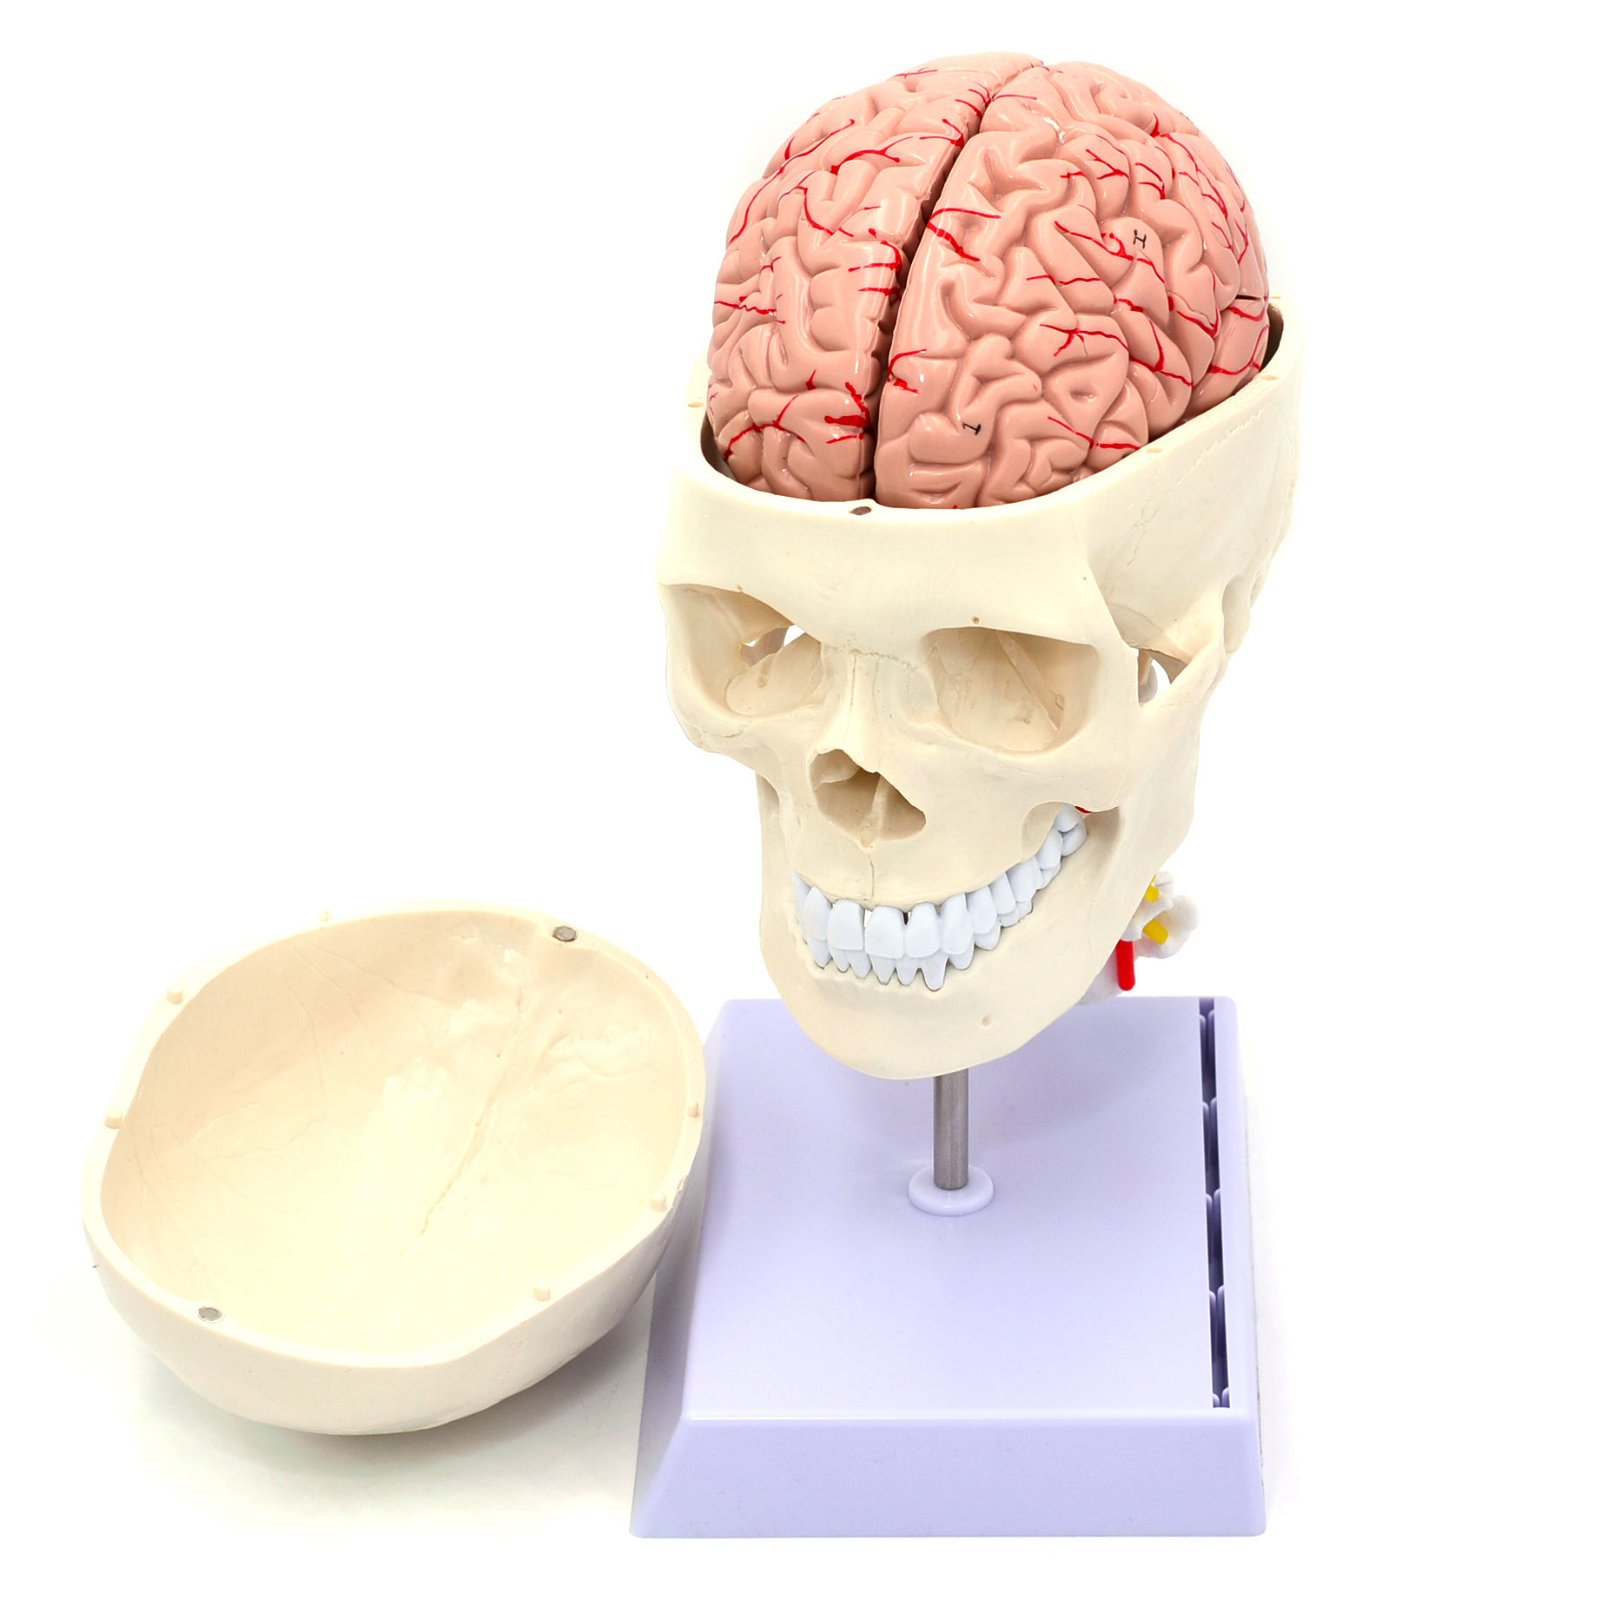 Craniu uman cu coloana neuro anatomie model didactic artificial medical mulaj medicina PVC plastic B0455